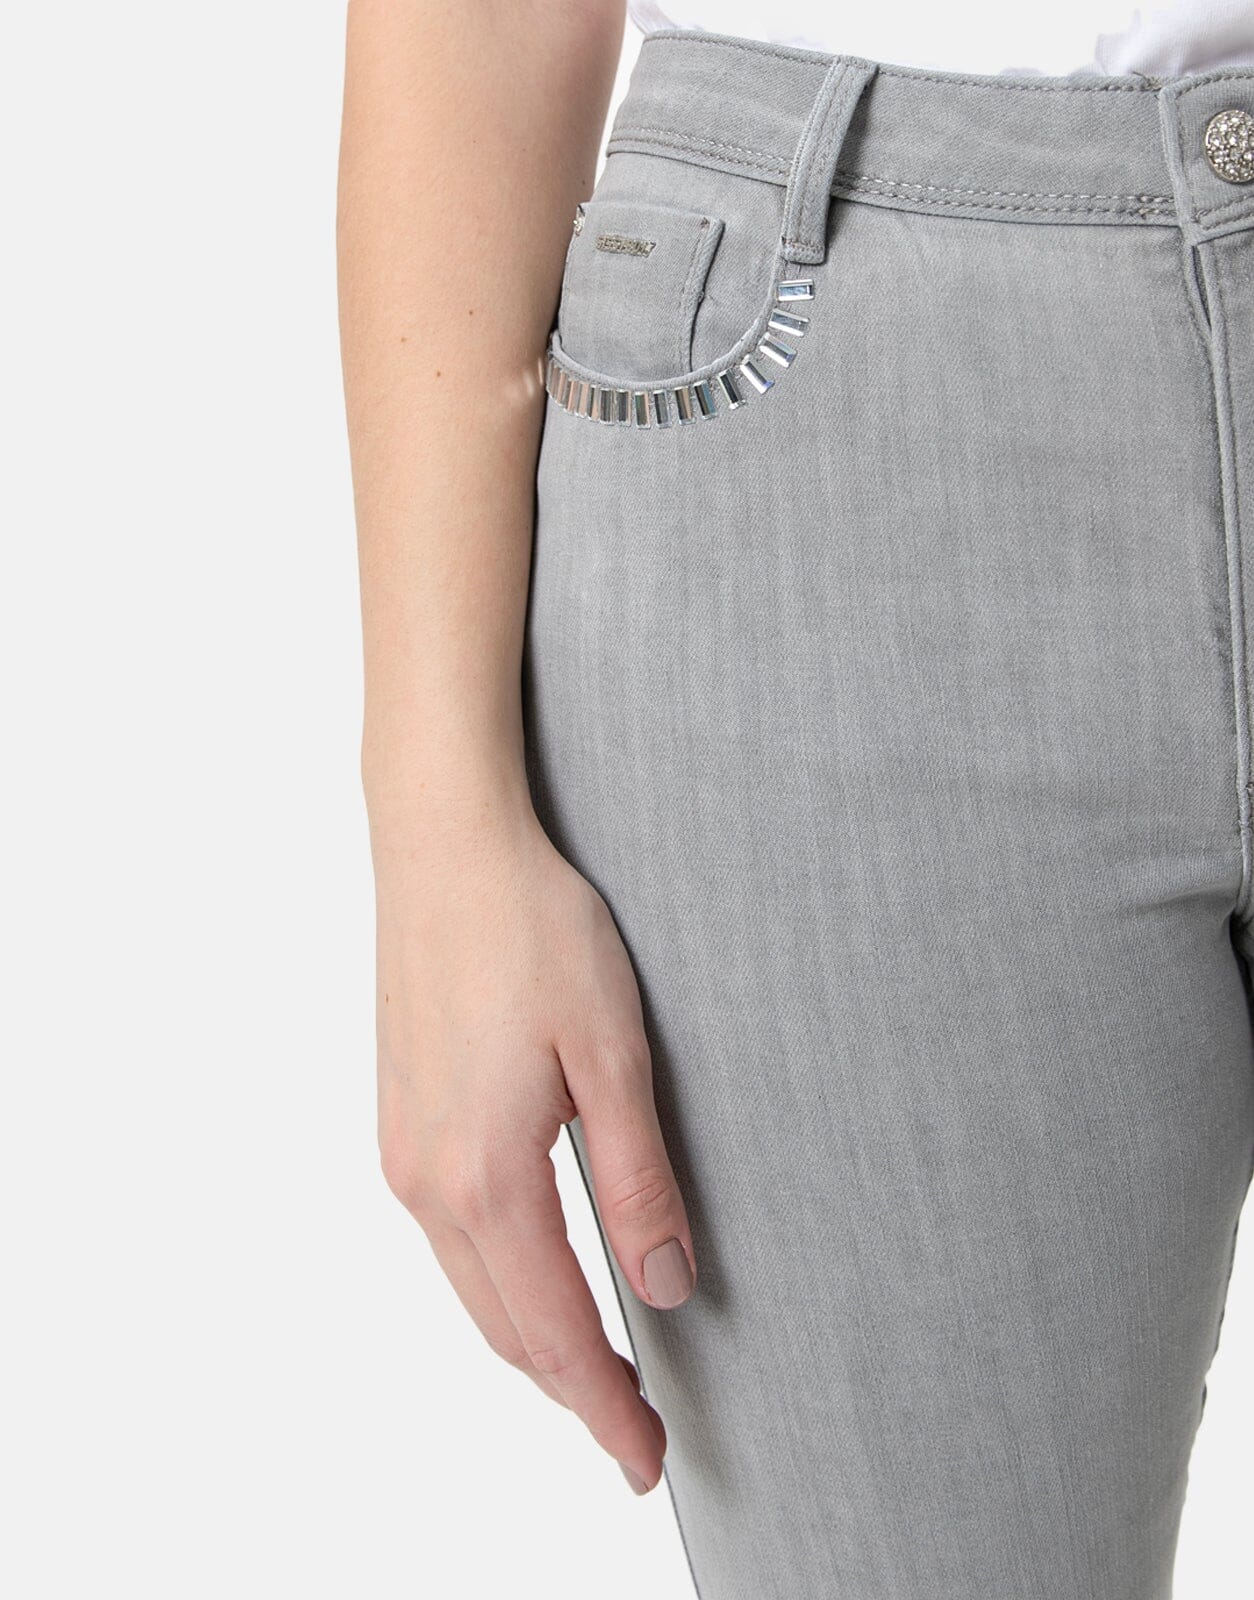 Sissy Boy Axel Mid Waist Pocket Bling Grey Jeans - Subwear